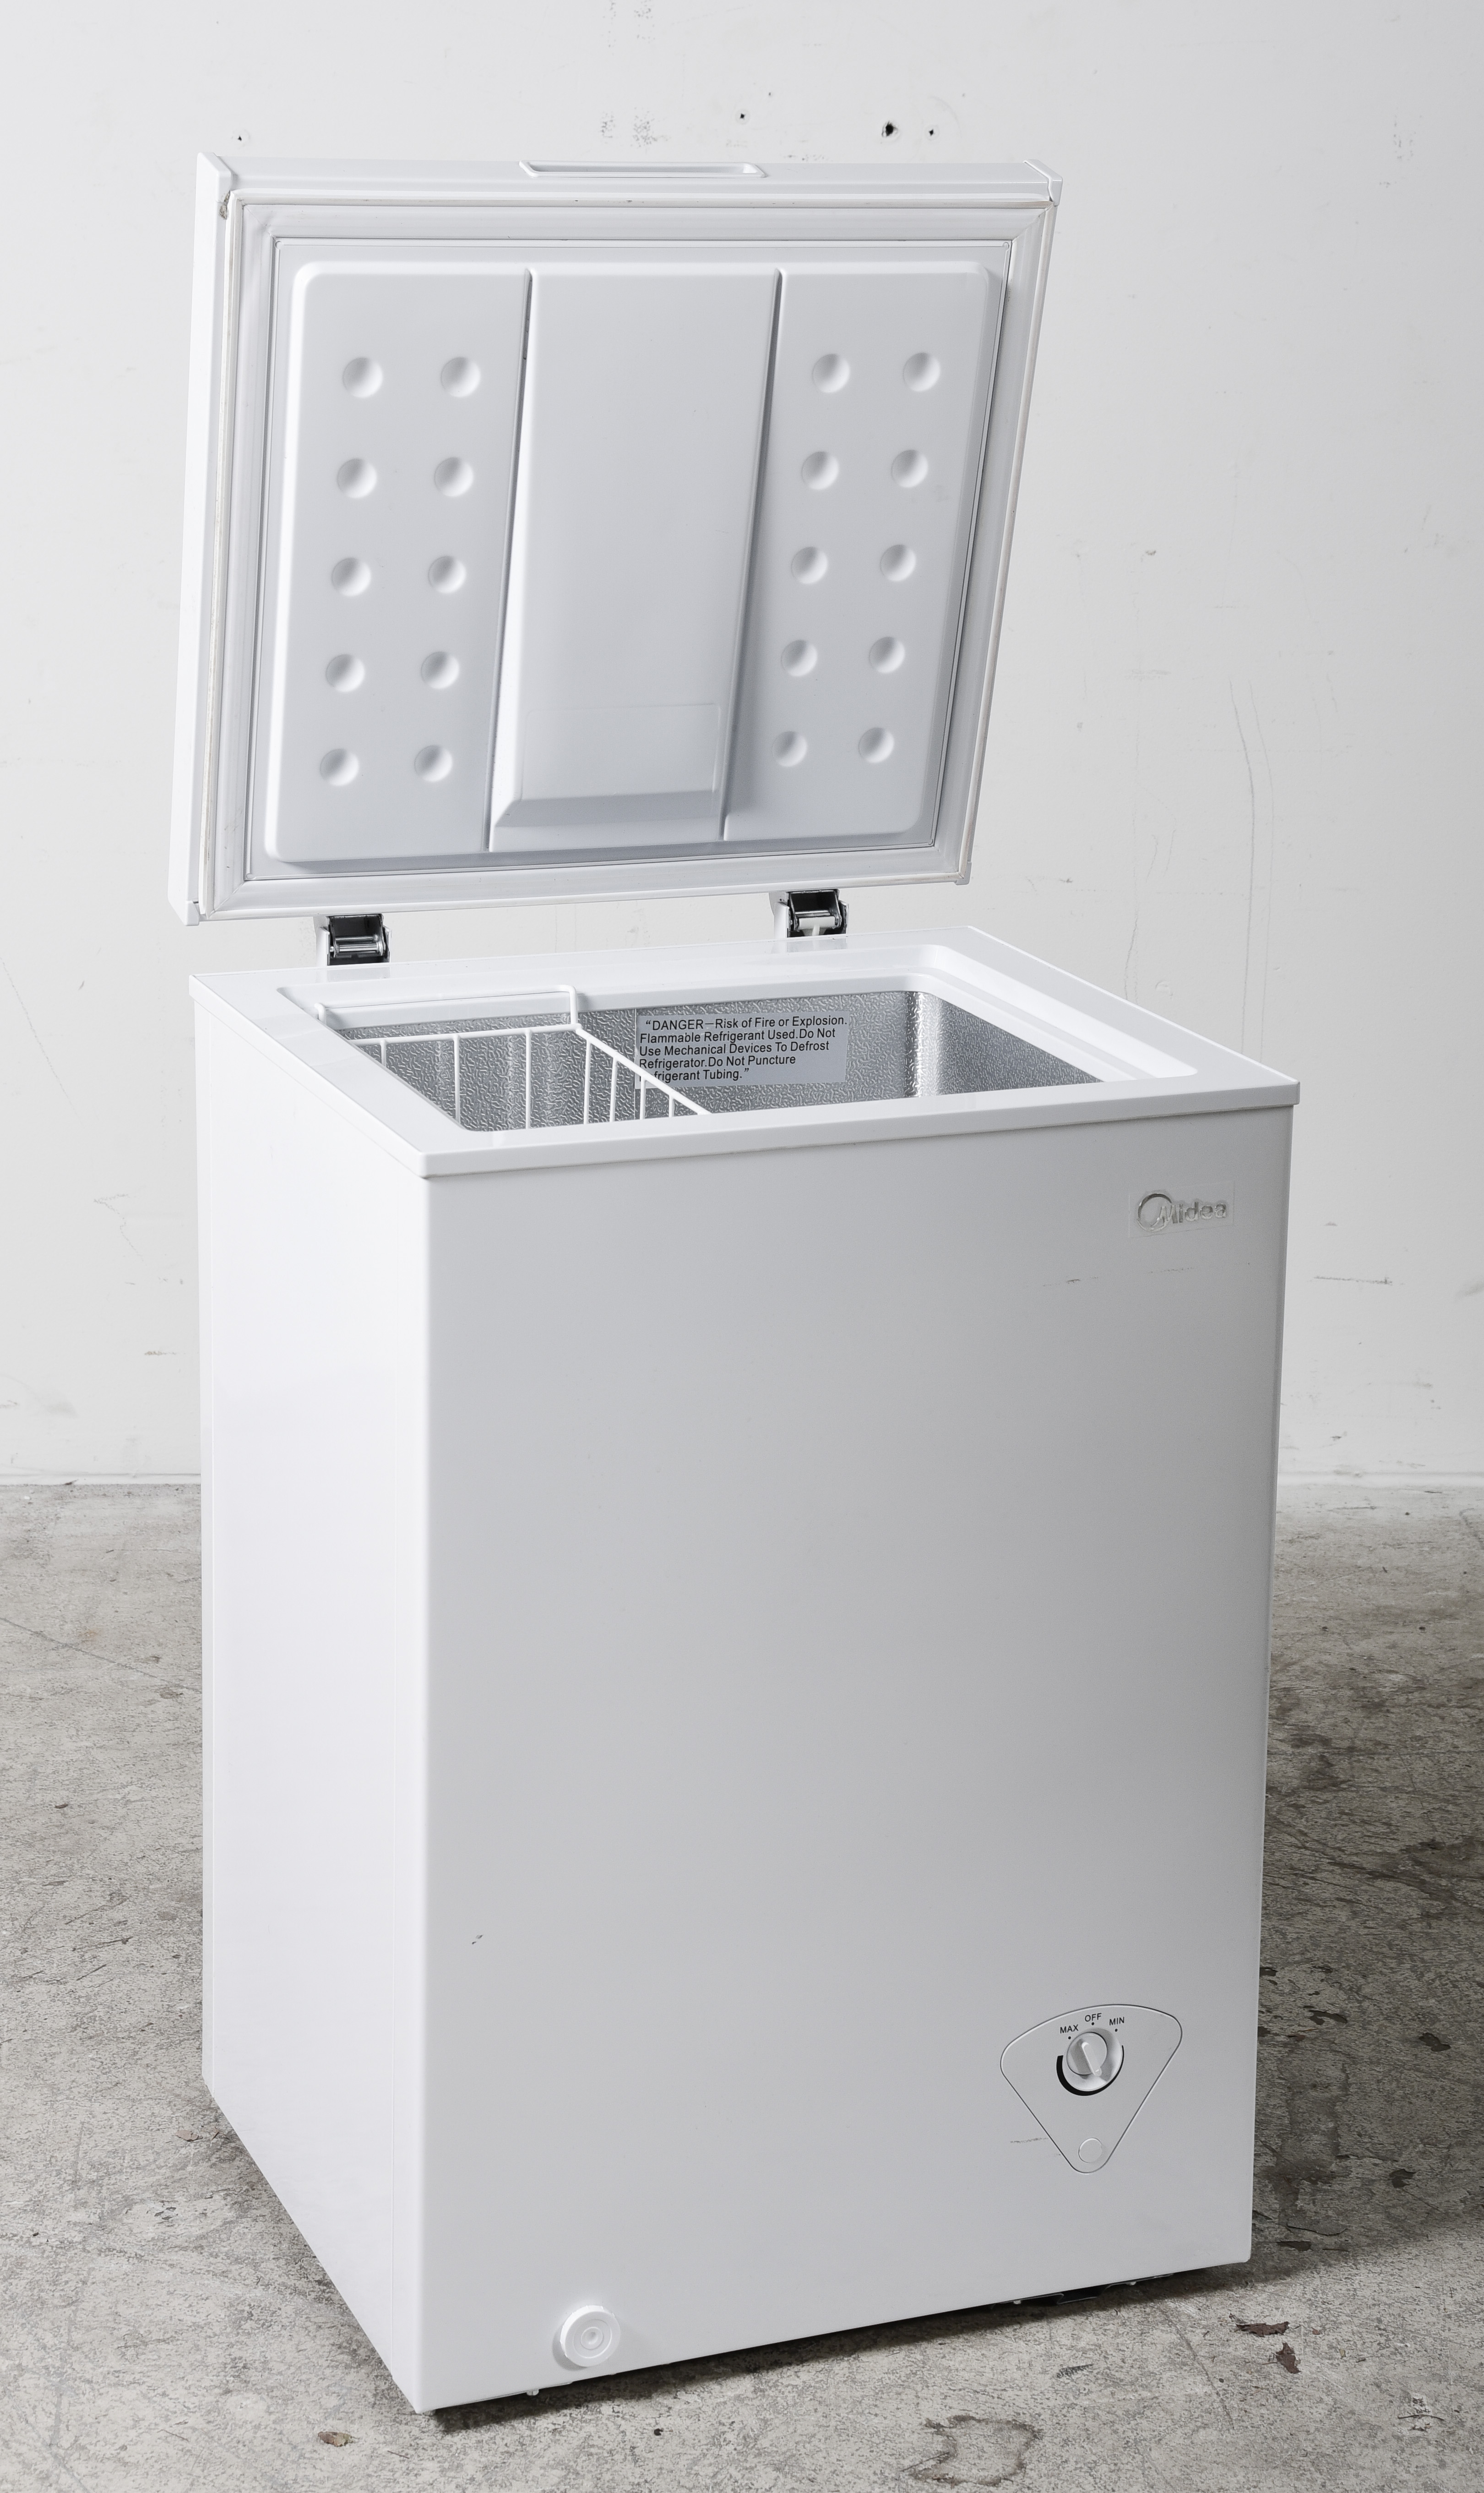 Midea standing chest freezer model 3c66a8